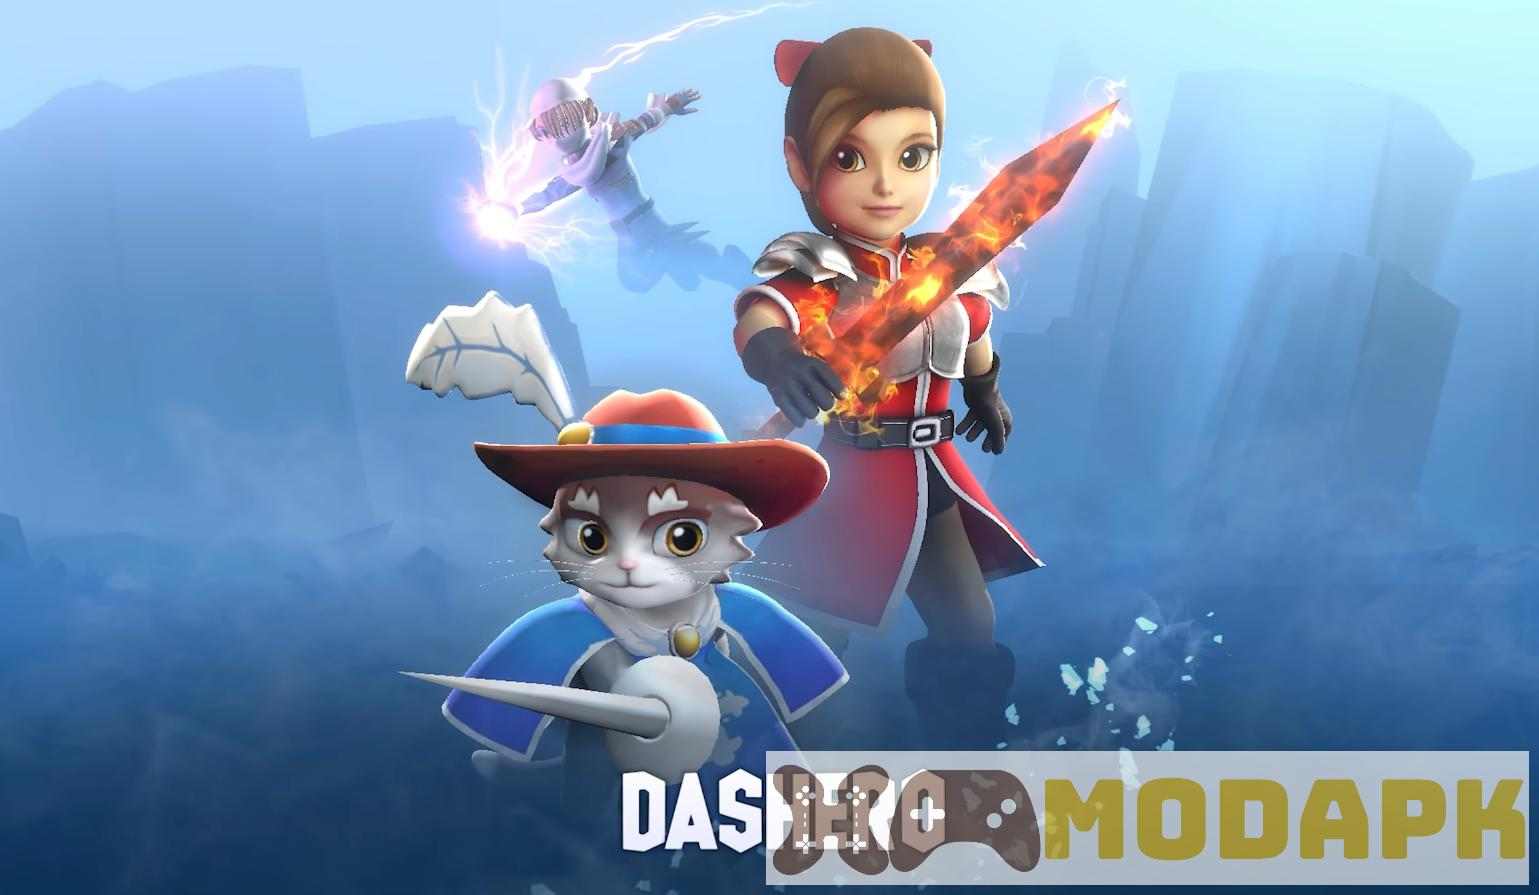 Dash.io MOD (Pro Menu, Infinite Money, High Damage, High Stamina, Weak Enemies) APK 0.9.9